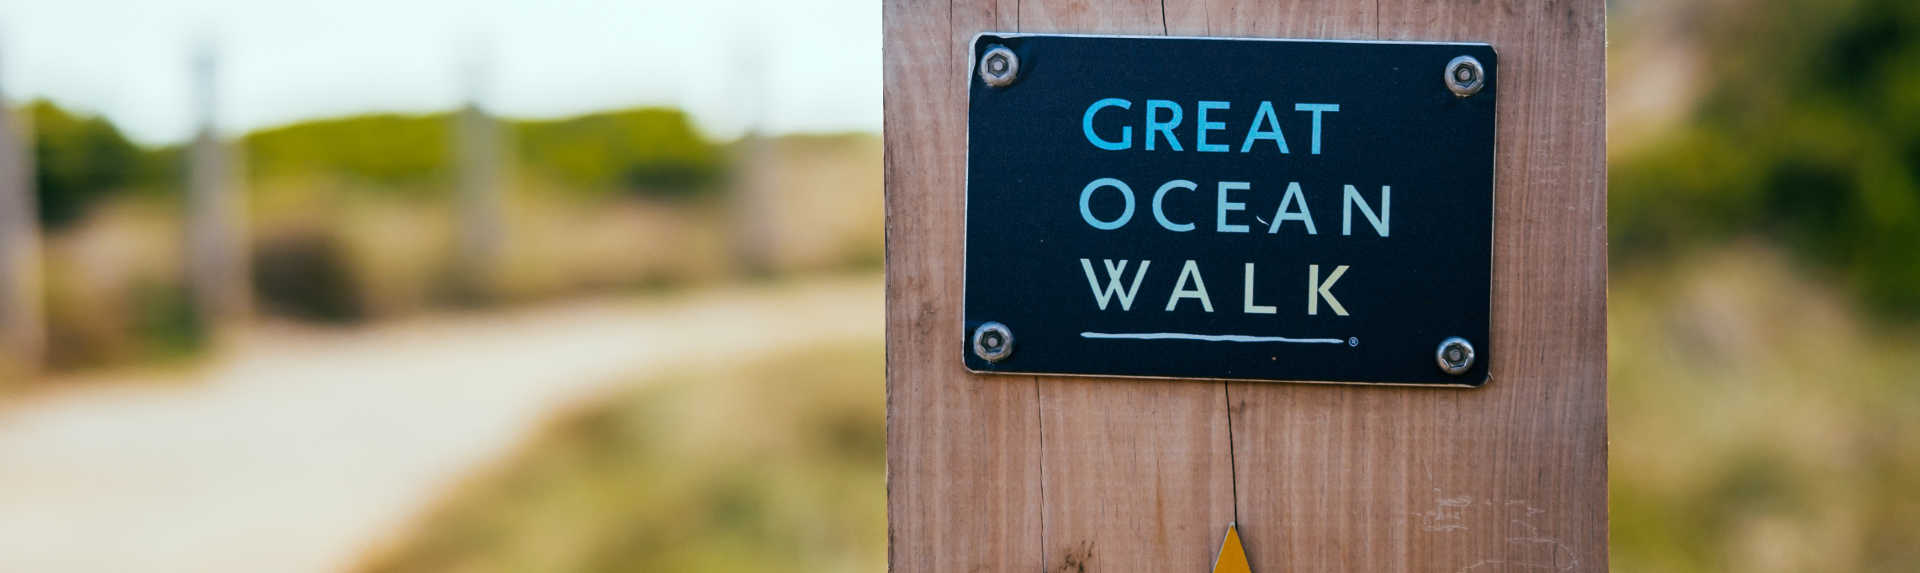 great-ocean-walk-great-ocean-road